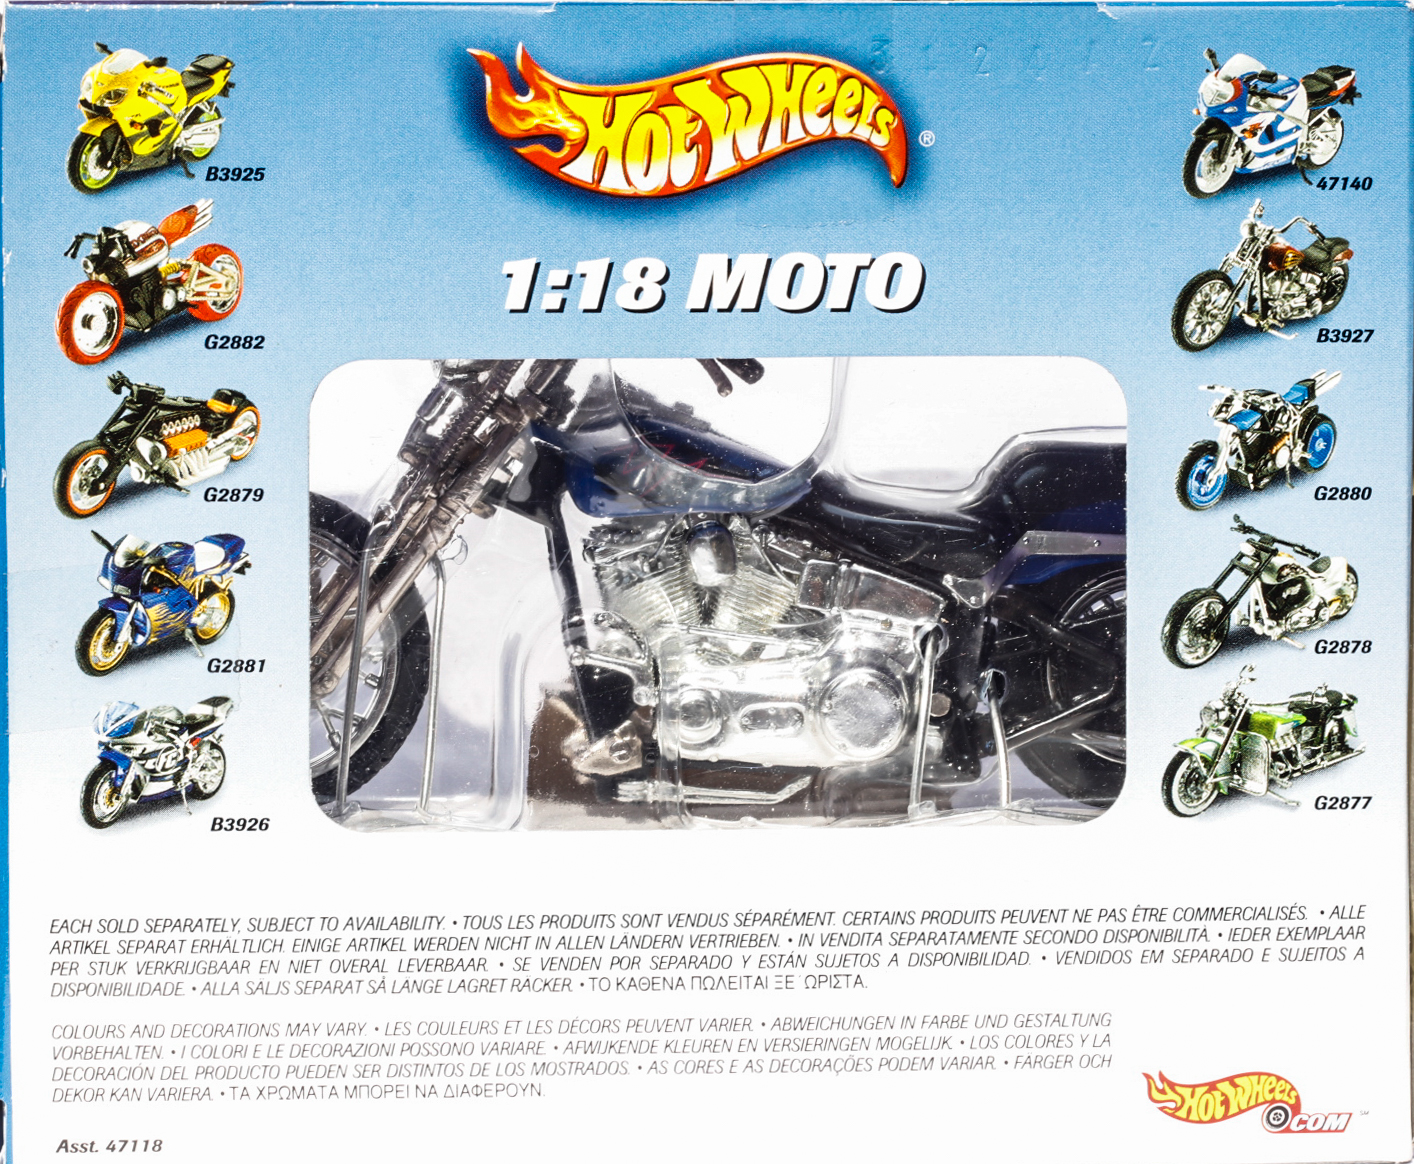 Hotwheels 1-18 Moto